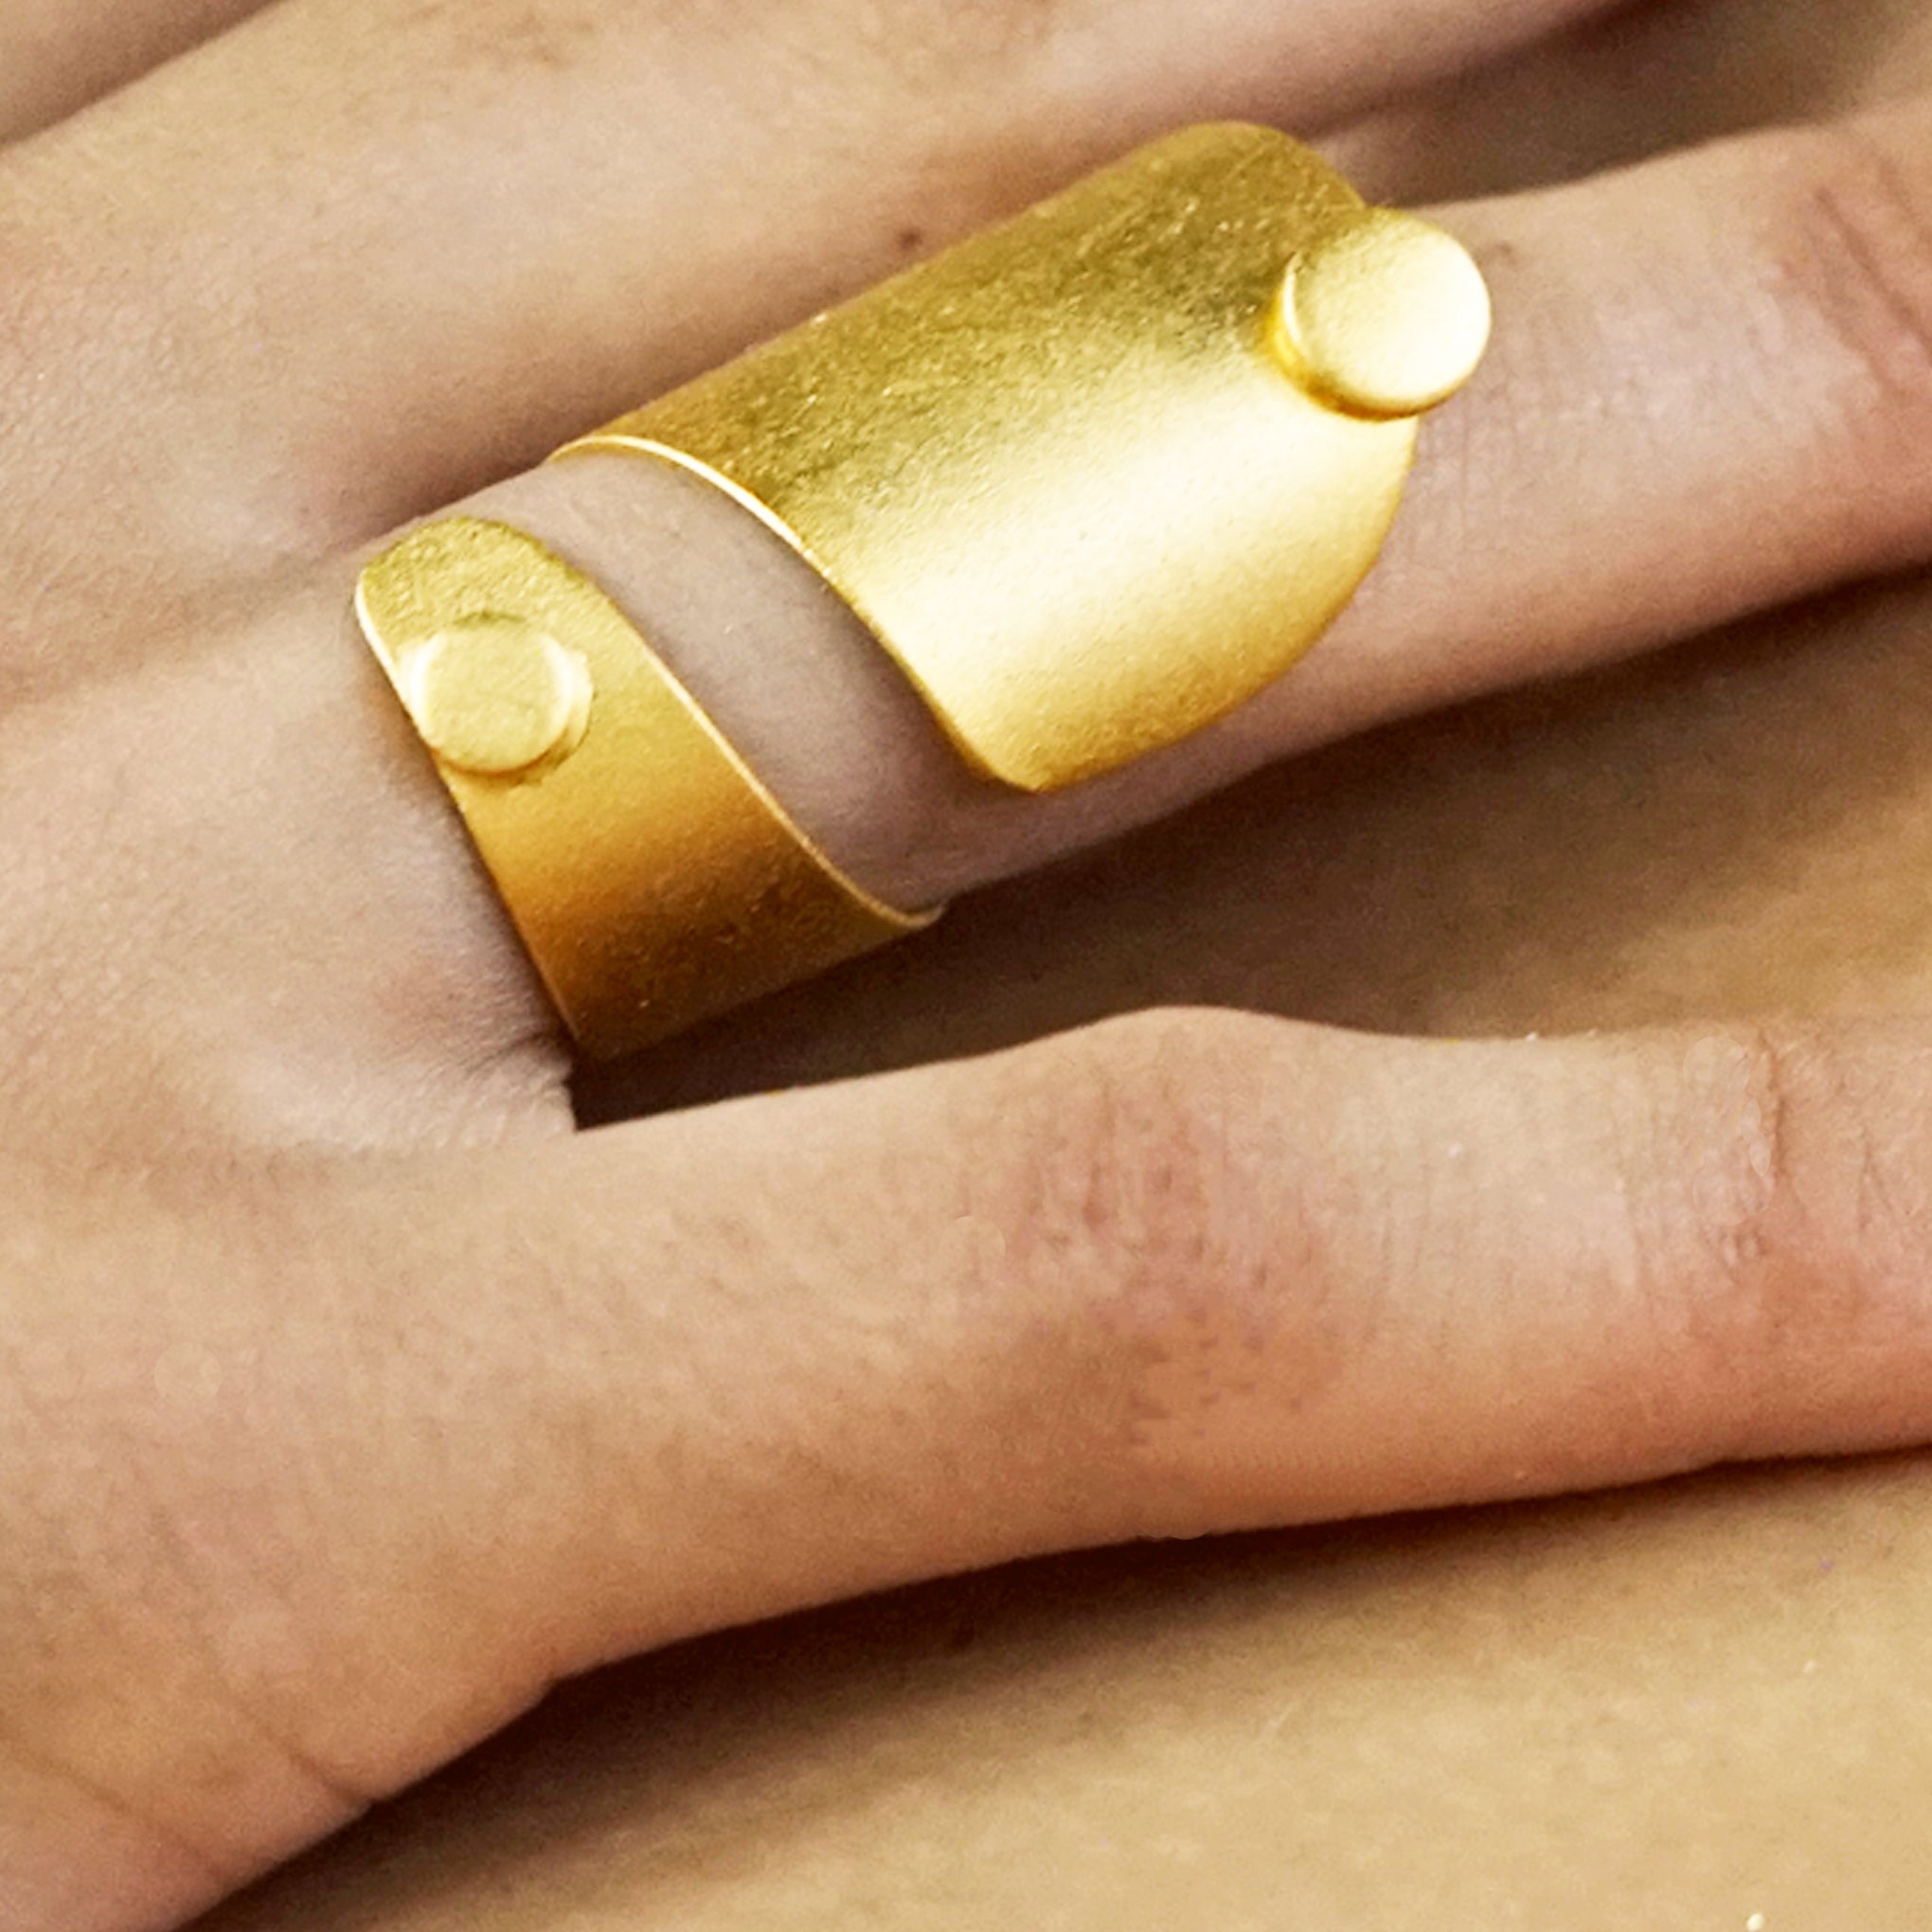 Hex Ring, Gold | Men's Rings | Miansai